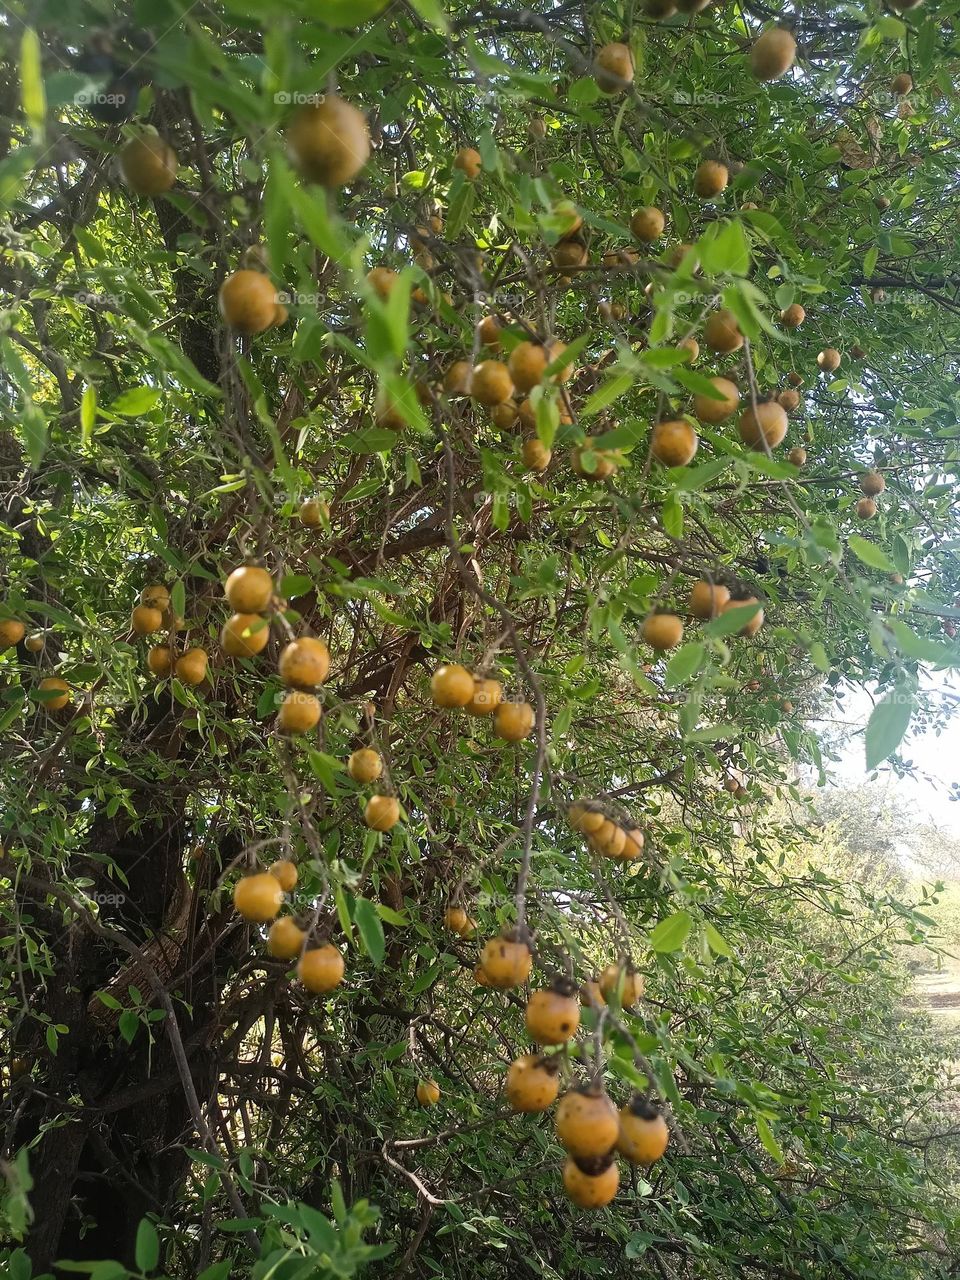 Diospyros melanoxylon, the Coromandel ebony or East Indian ebony, is a species of flowering tree in the family Ebenaceae native to India and Sri Lanka; it has a hard, dry bark. Its common name derives from Coromandel, the coast of southeastern India.